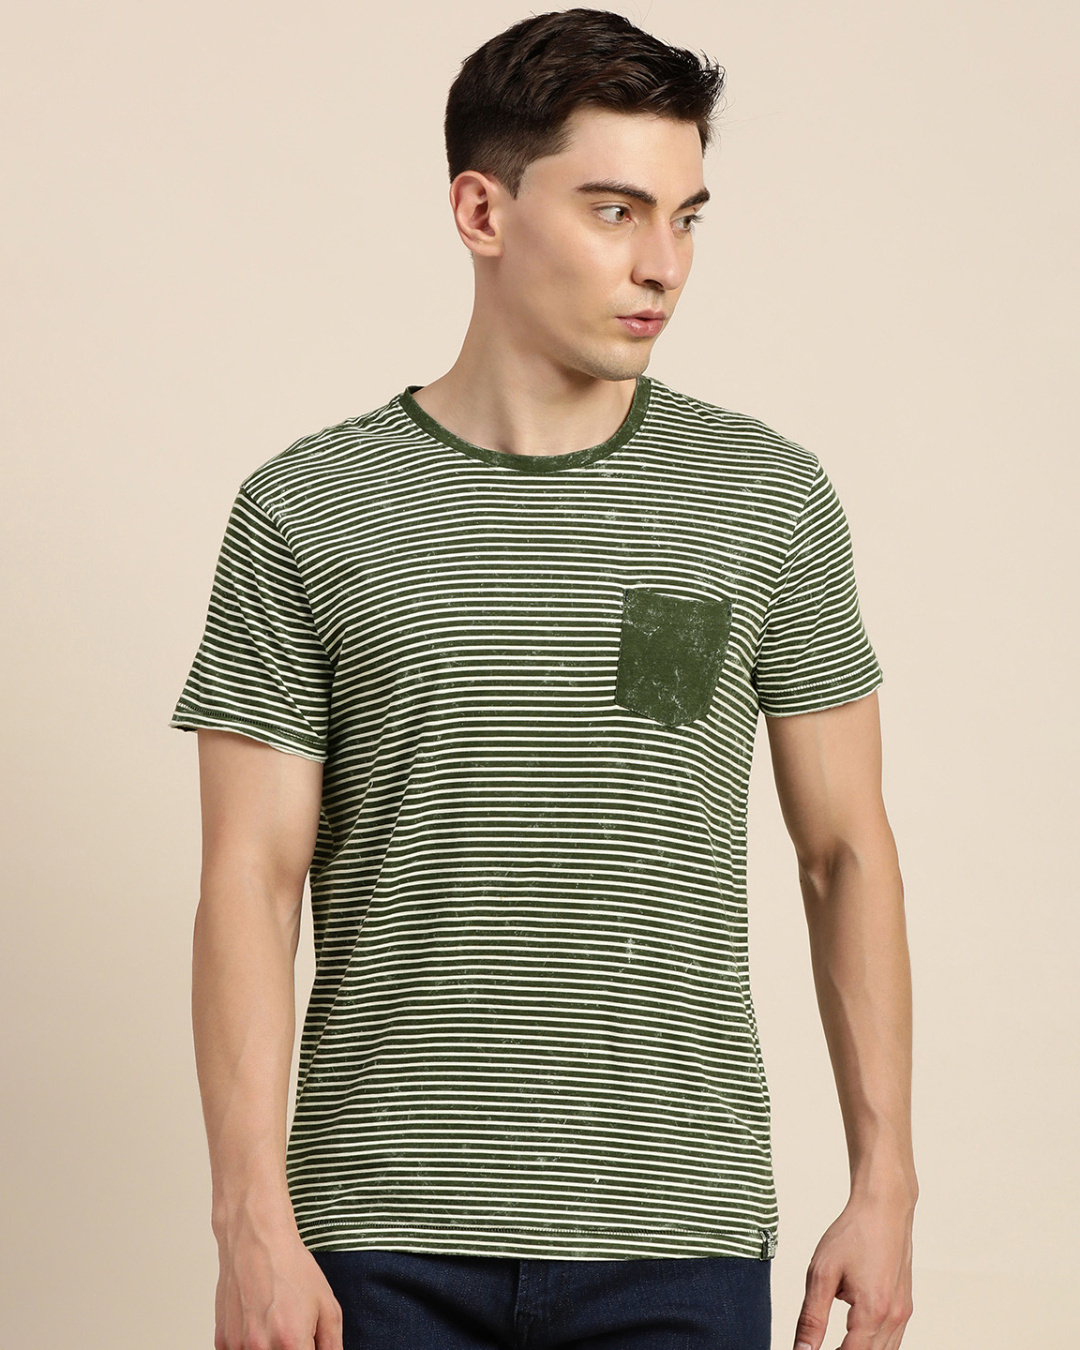 Buy Men's Green Striped Slim Fit T-shirt Online at Bewakoof